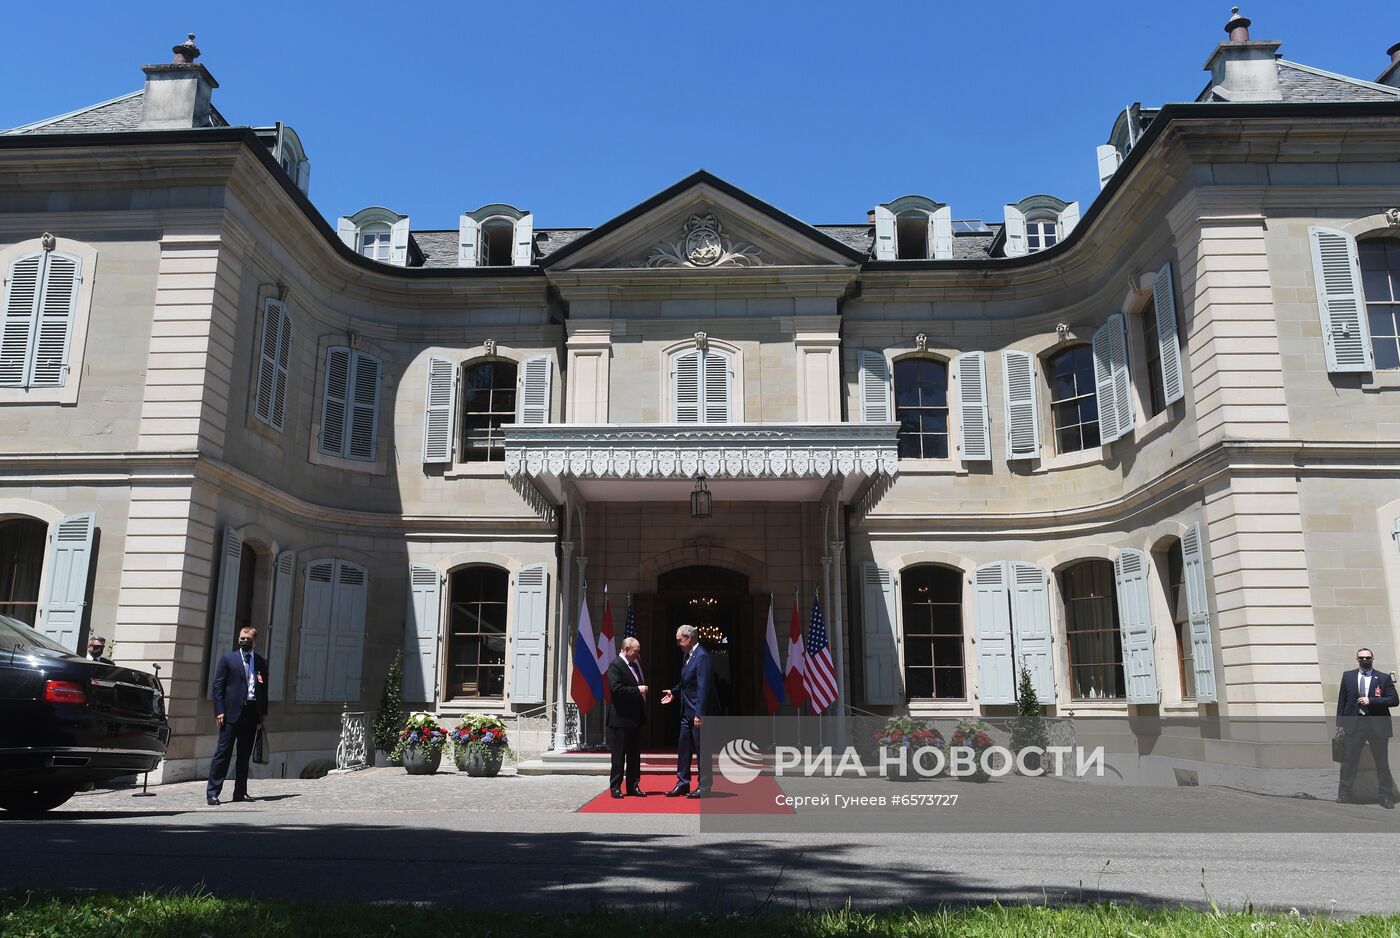 Встреча президента РФ В. Путина с президентом Швейцарии Ги Пармеленом в Женеве